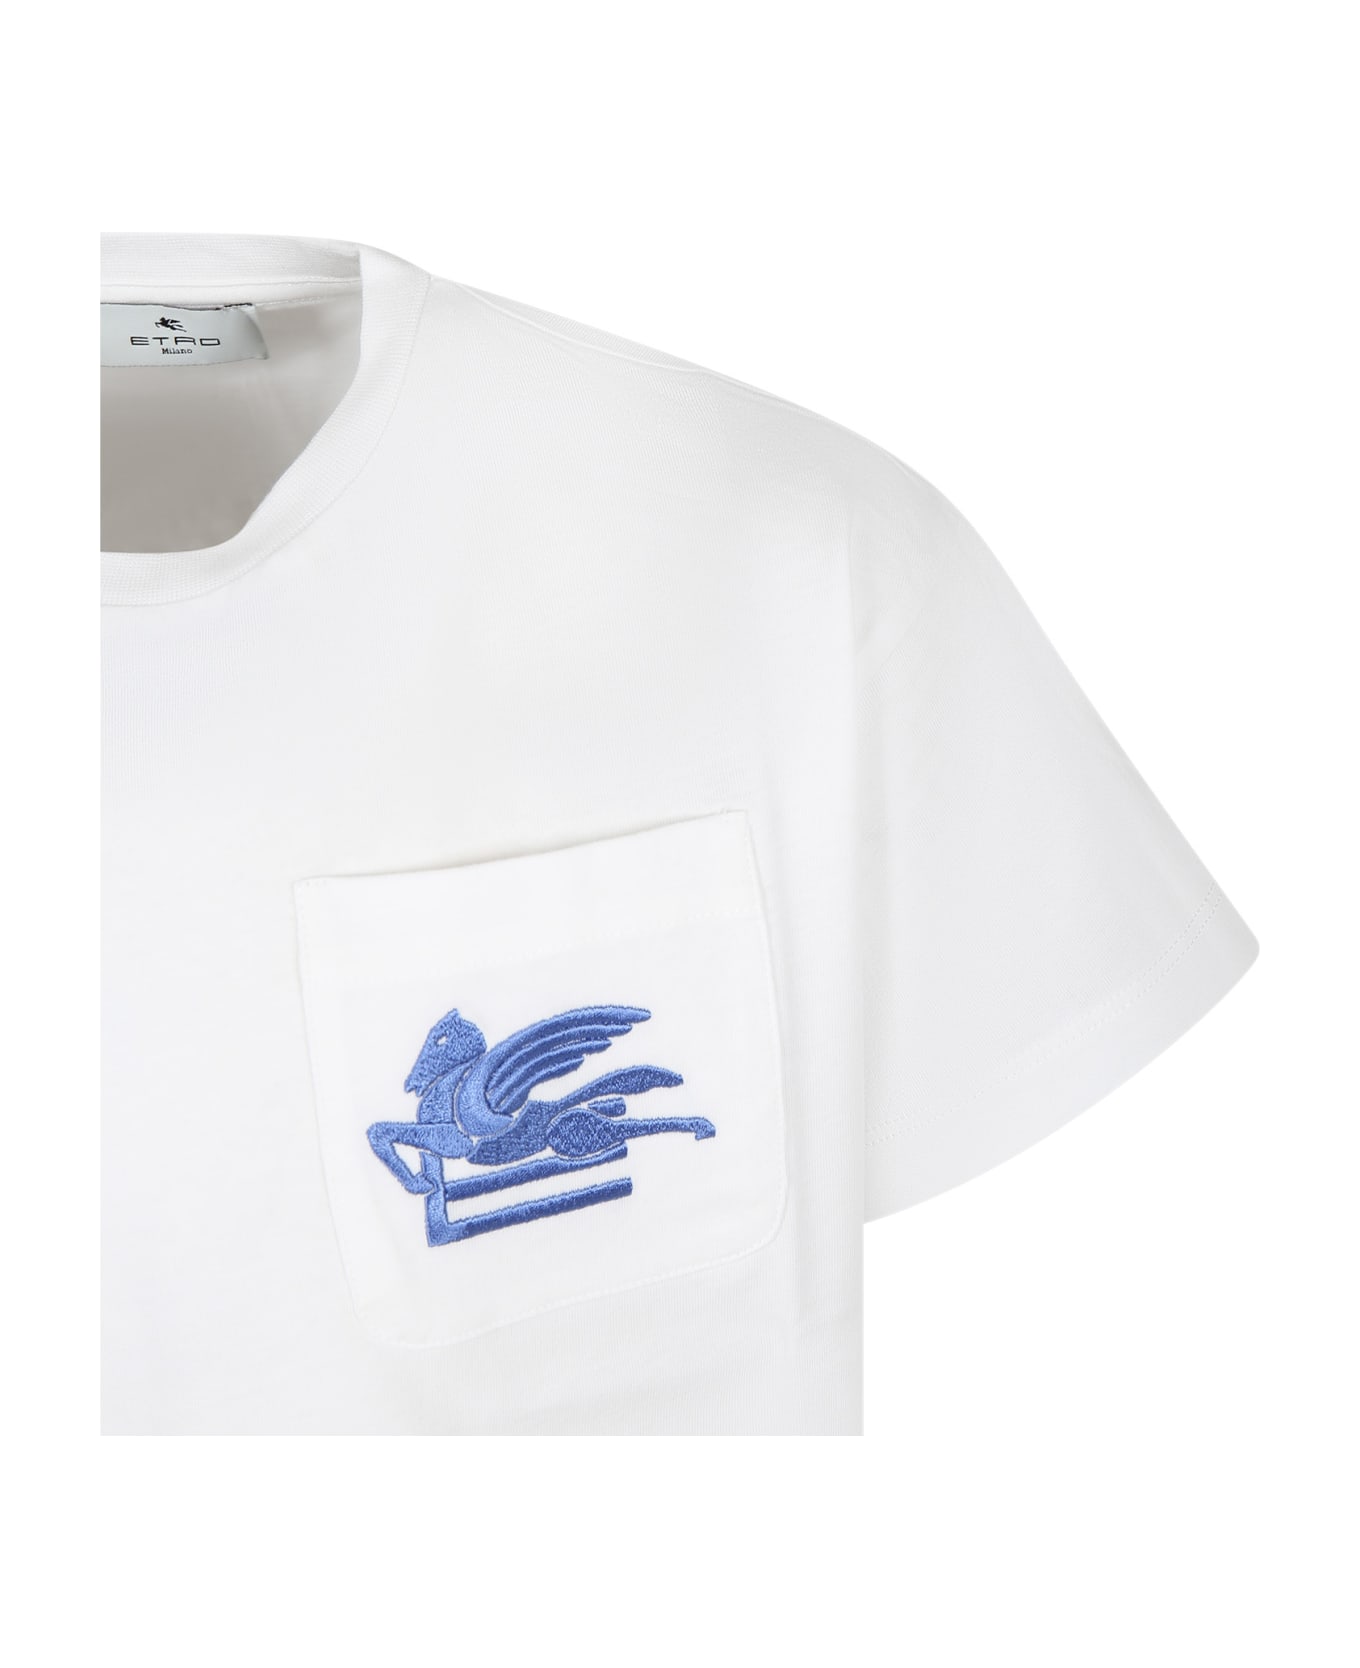 Etro White T-shirt For Kids With Iconic Pegasus - IVORY